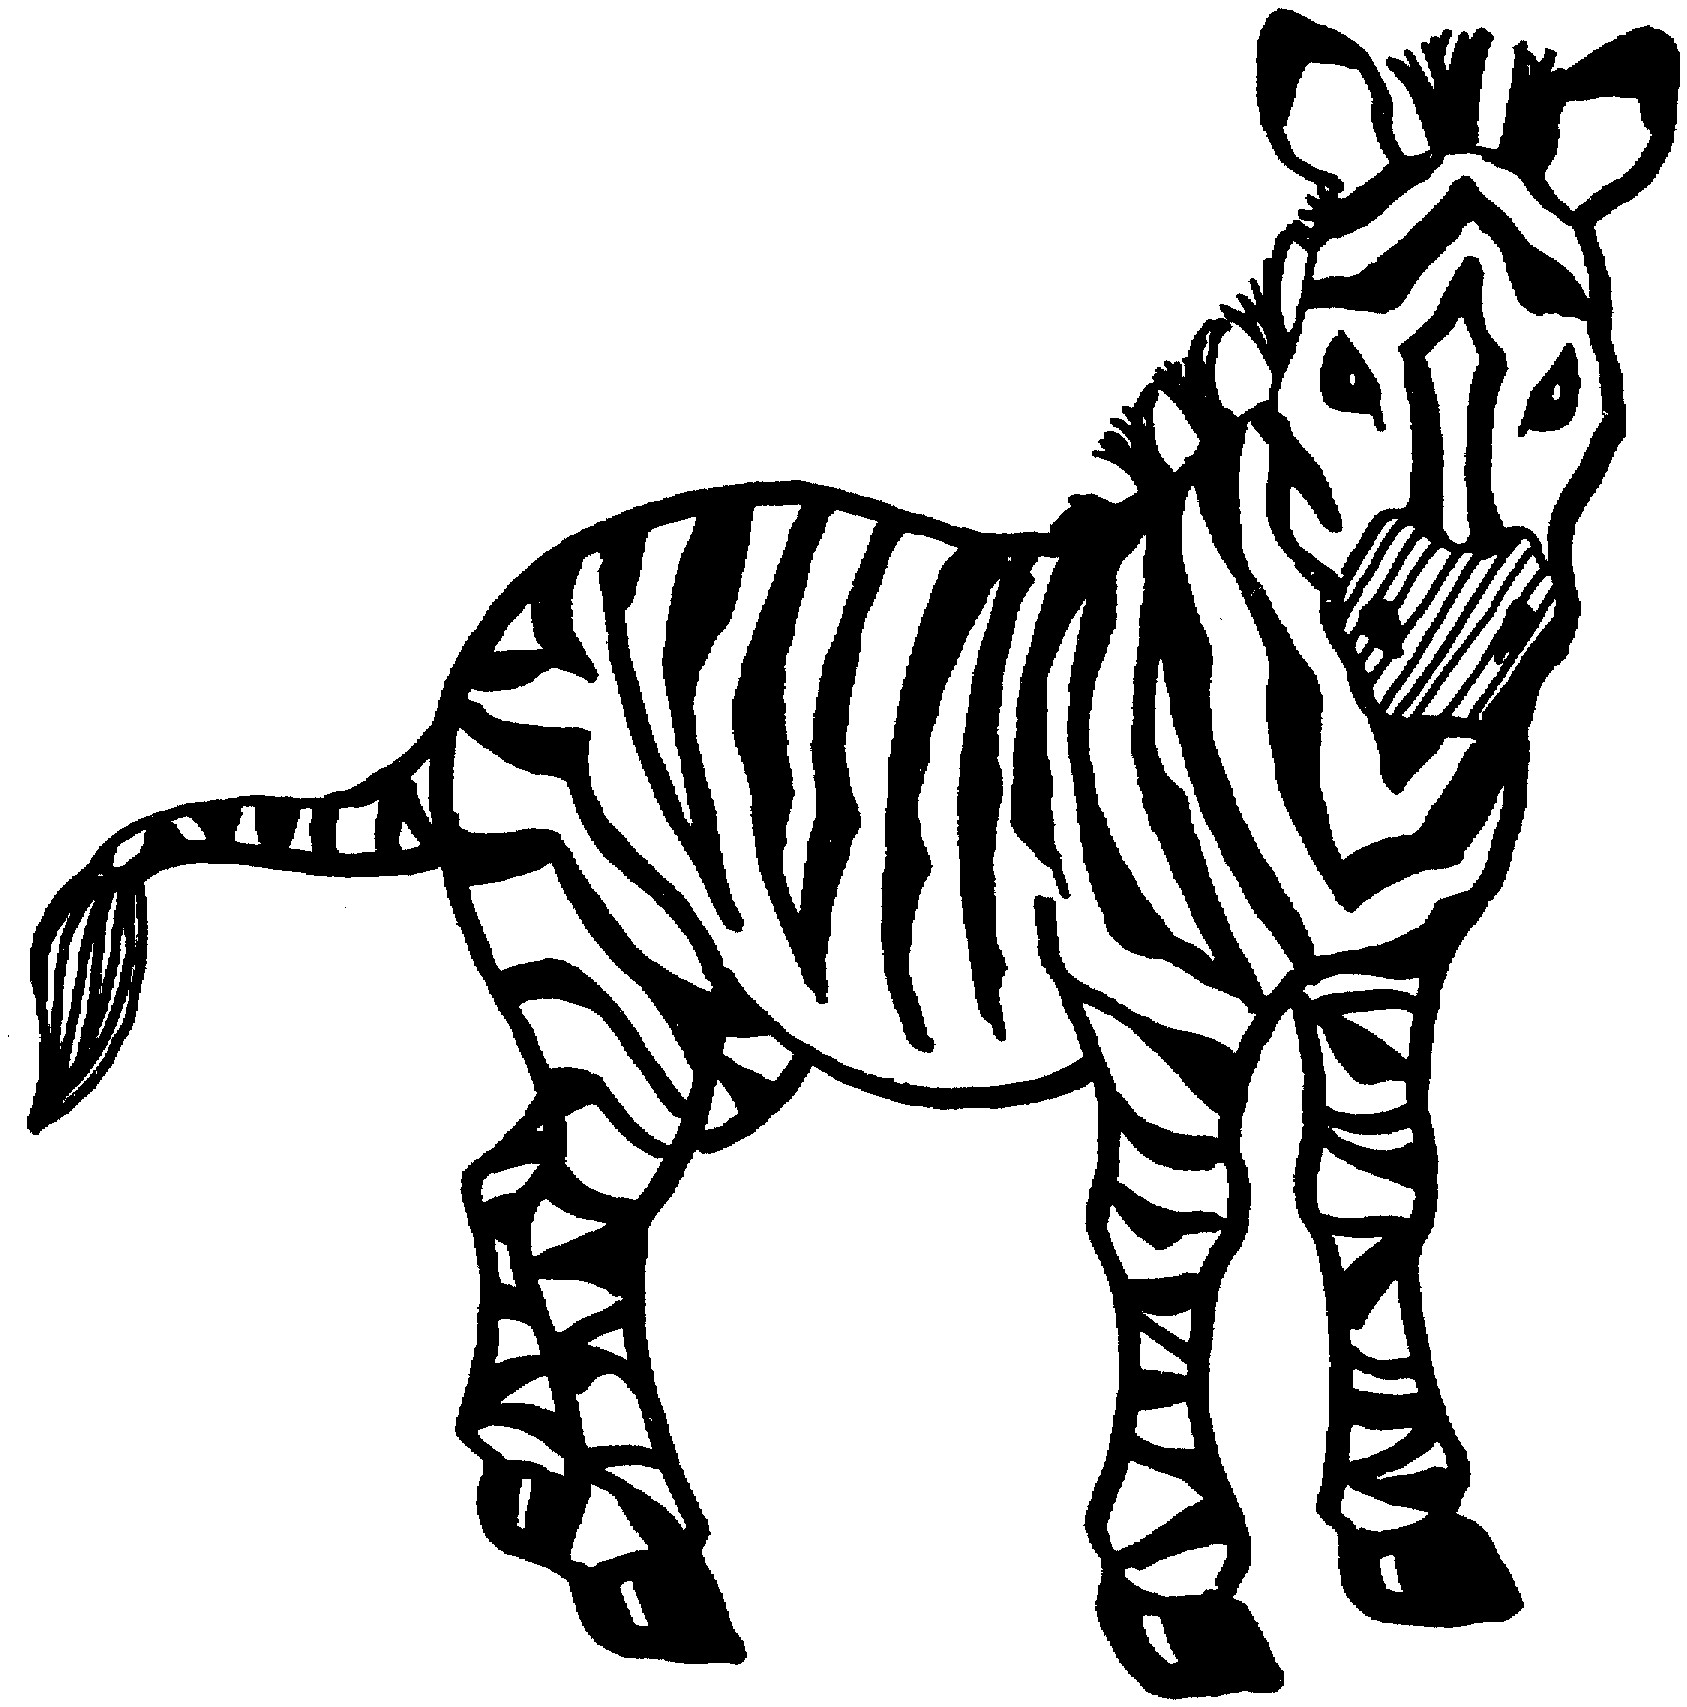 Zebra Coloring Pages Printable
 Zebra 57 Animals – Printable coloring pages